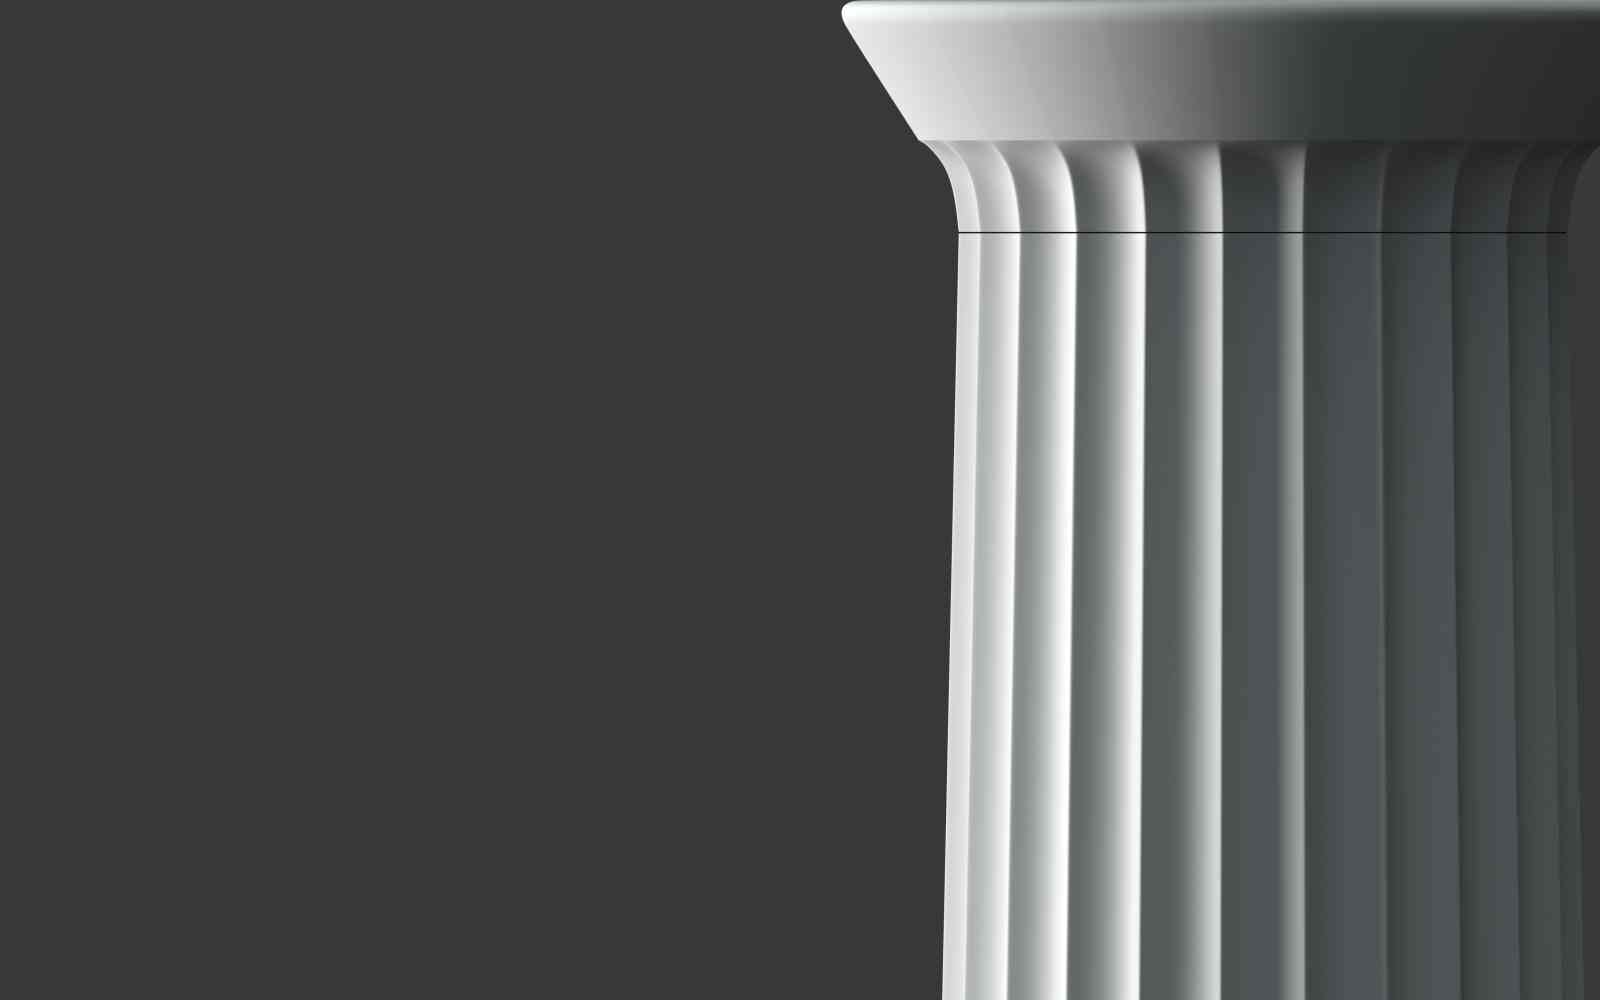 Single white column on black background